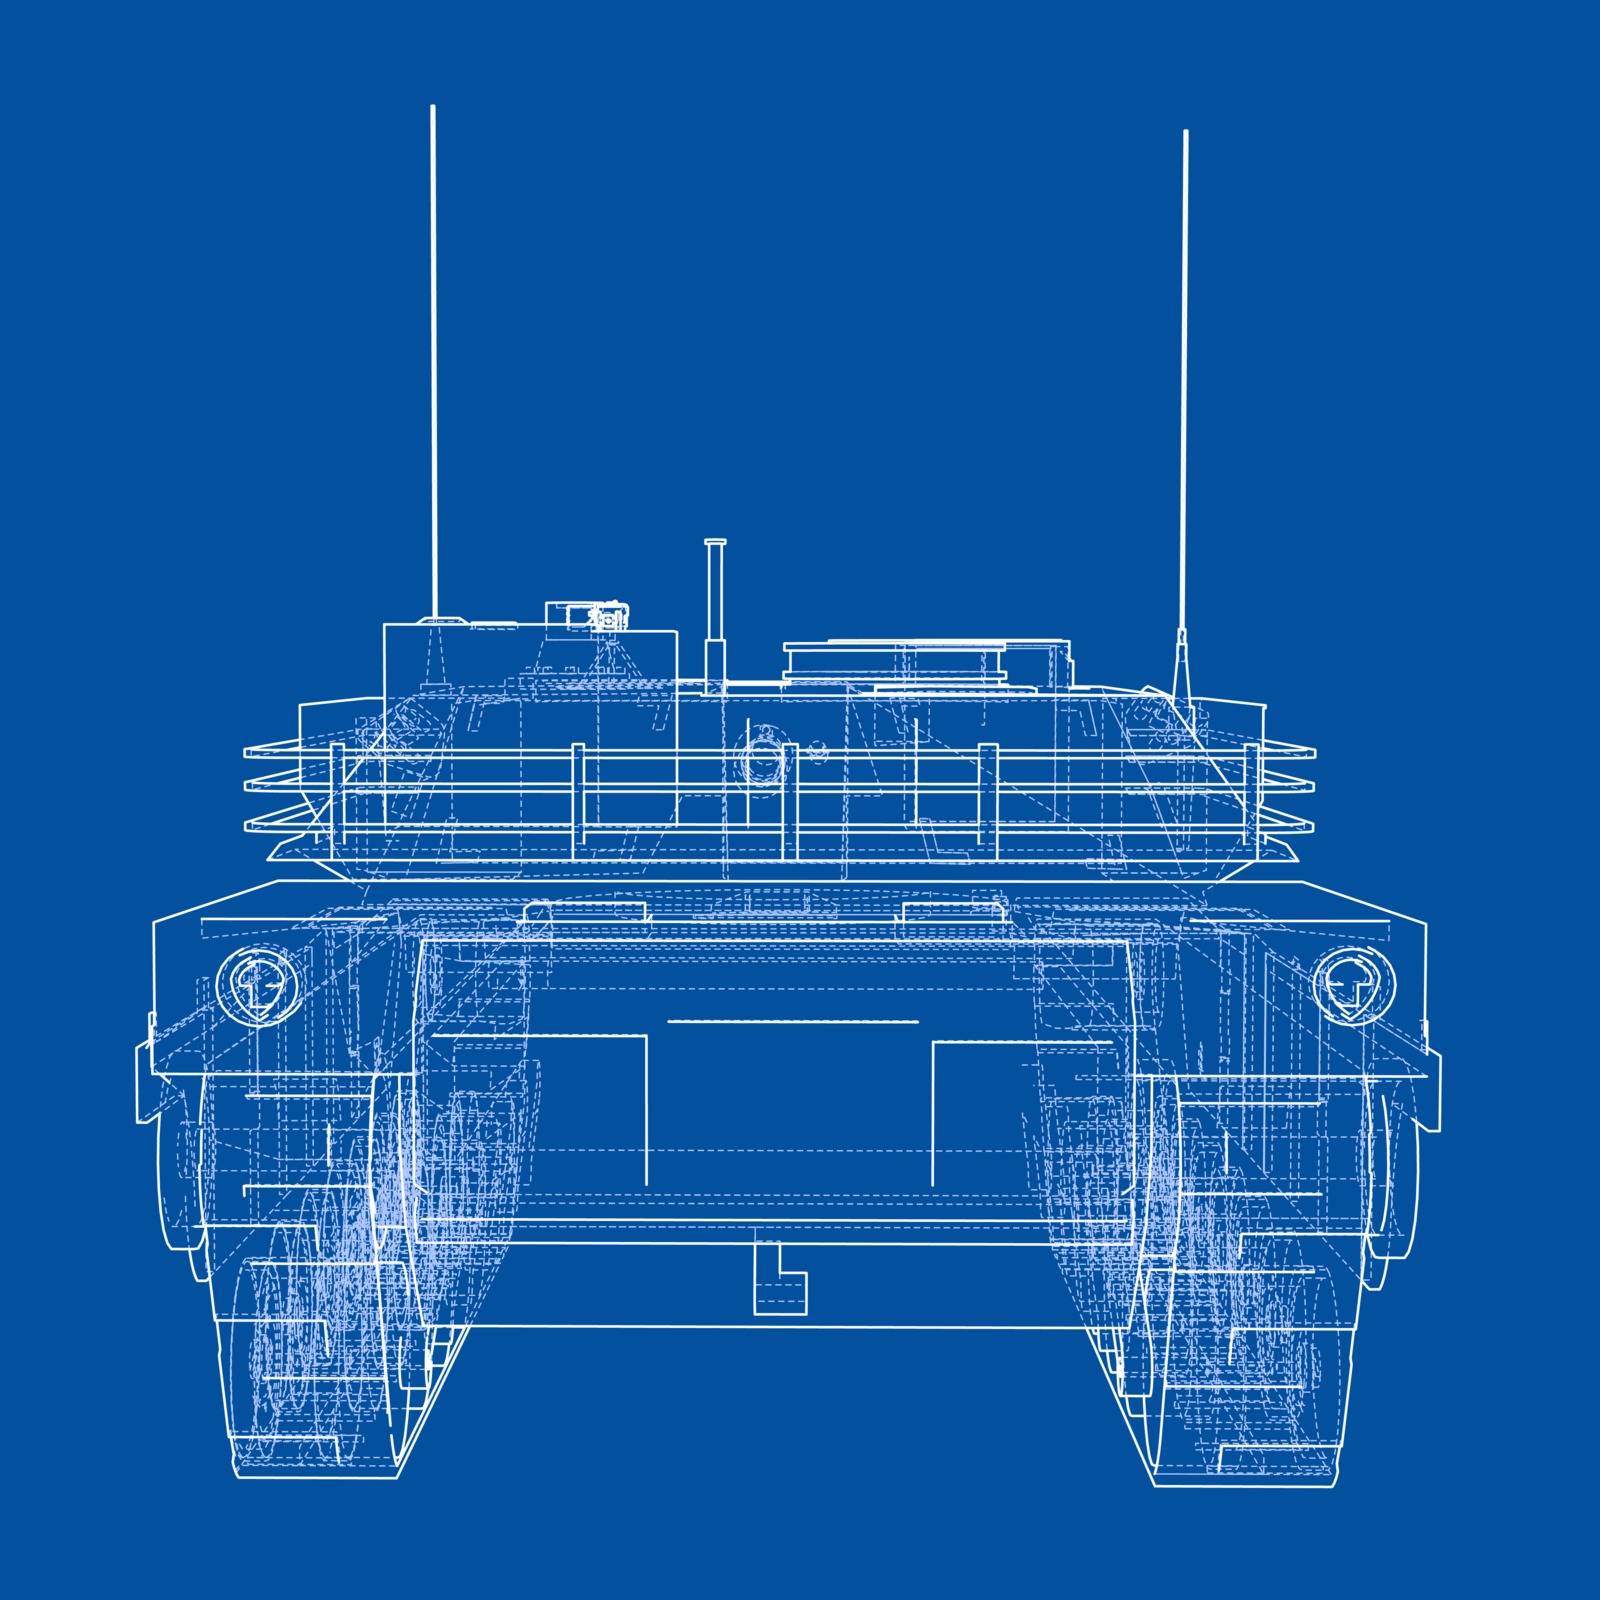 Blueprint of realistic tank by cherezoff